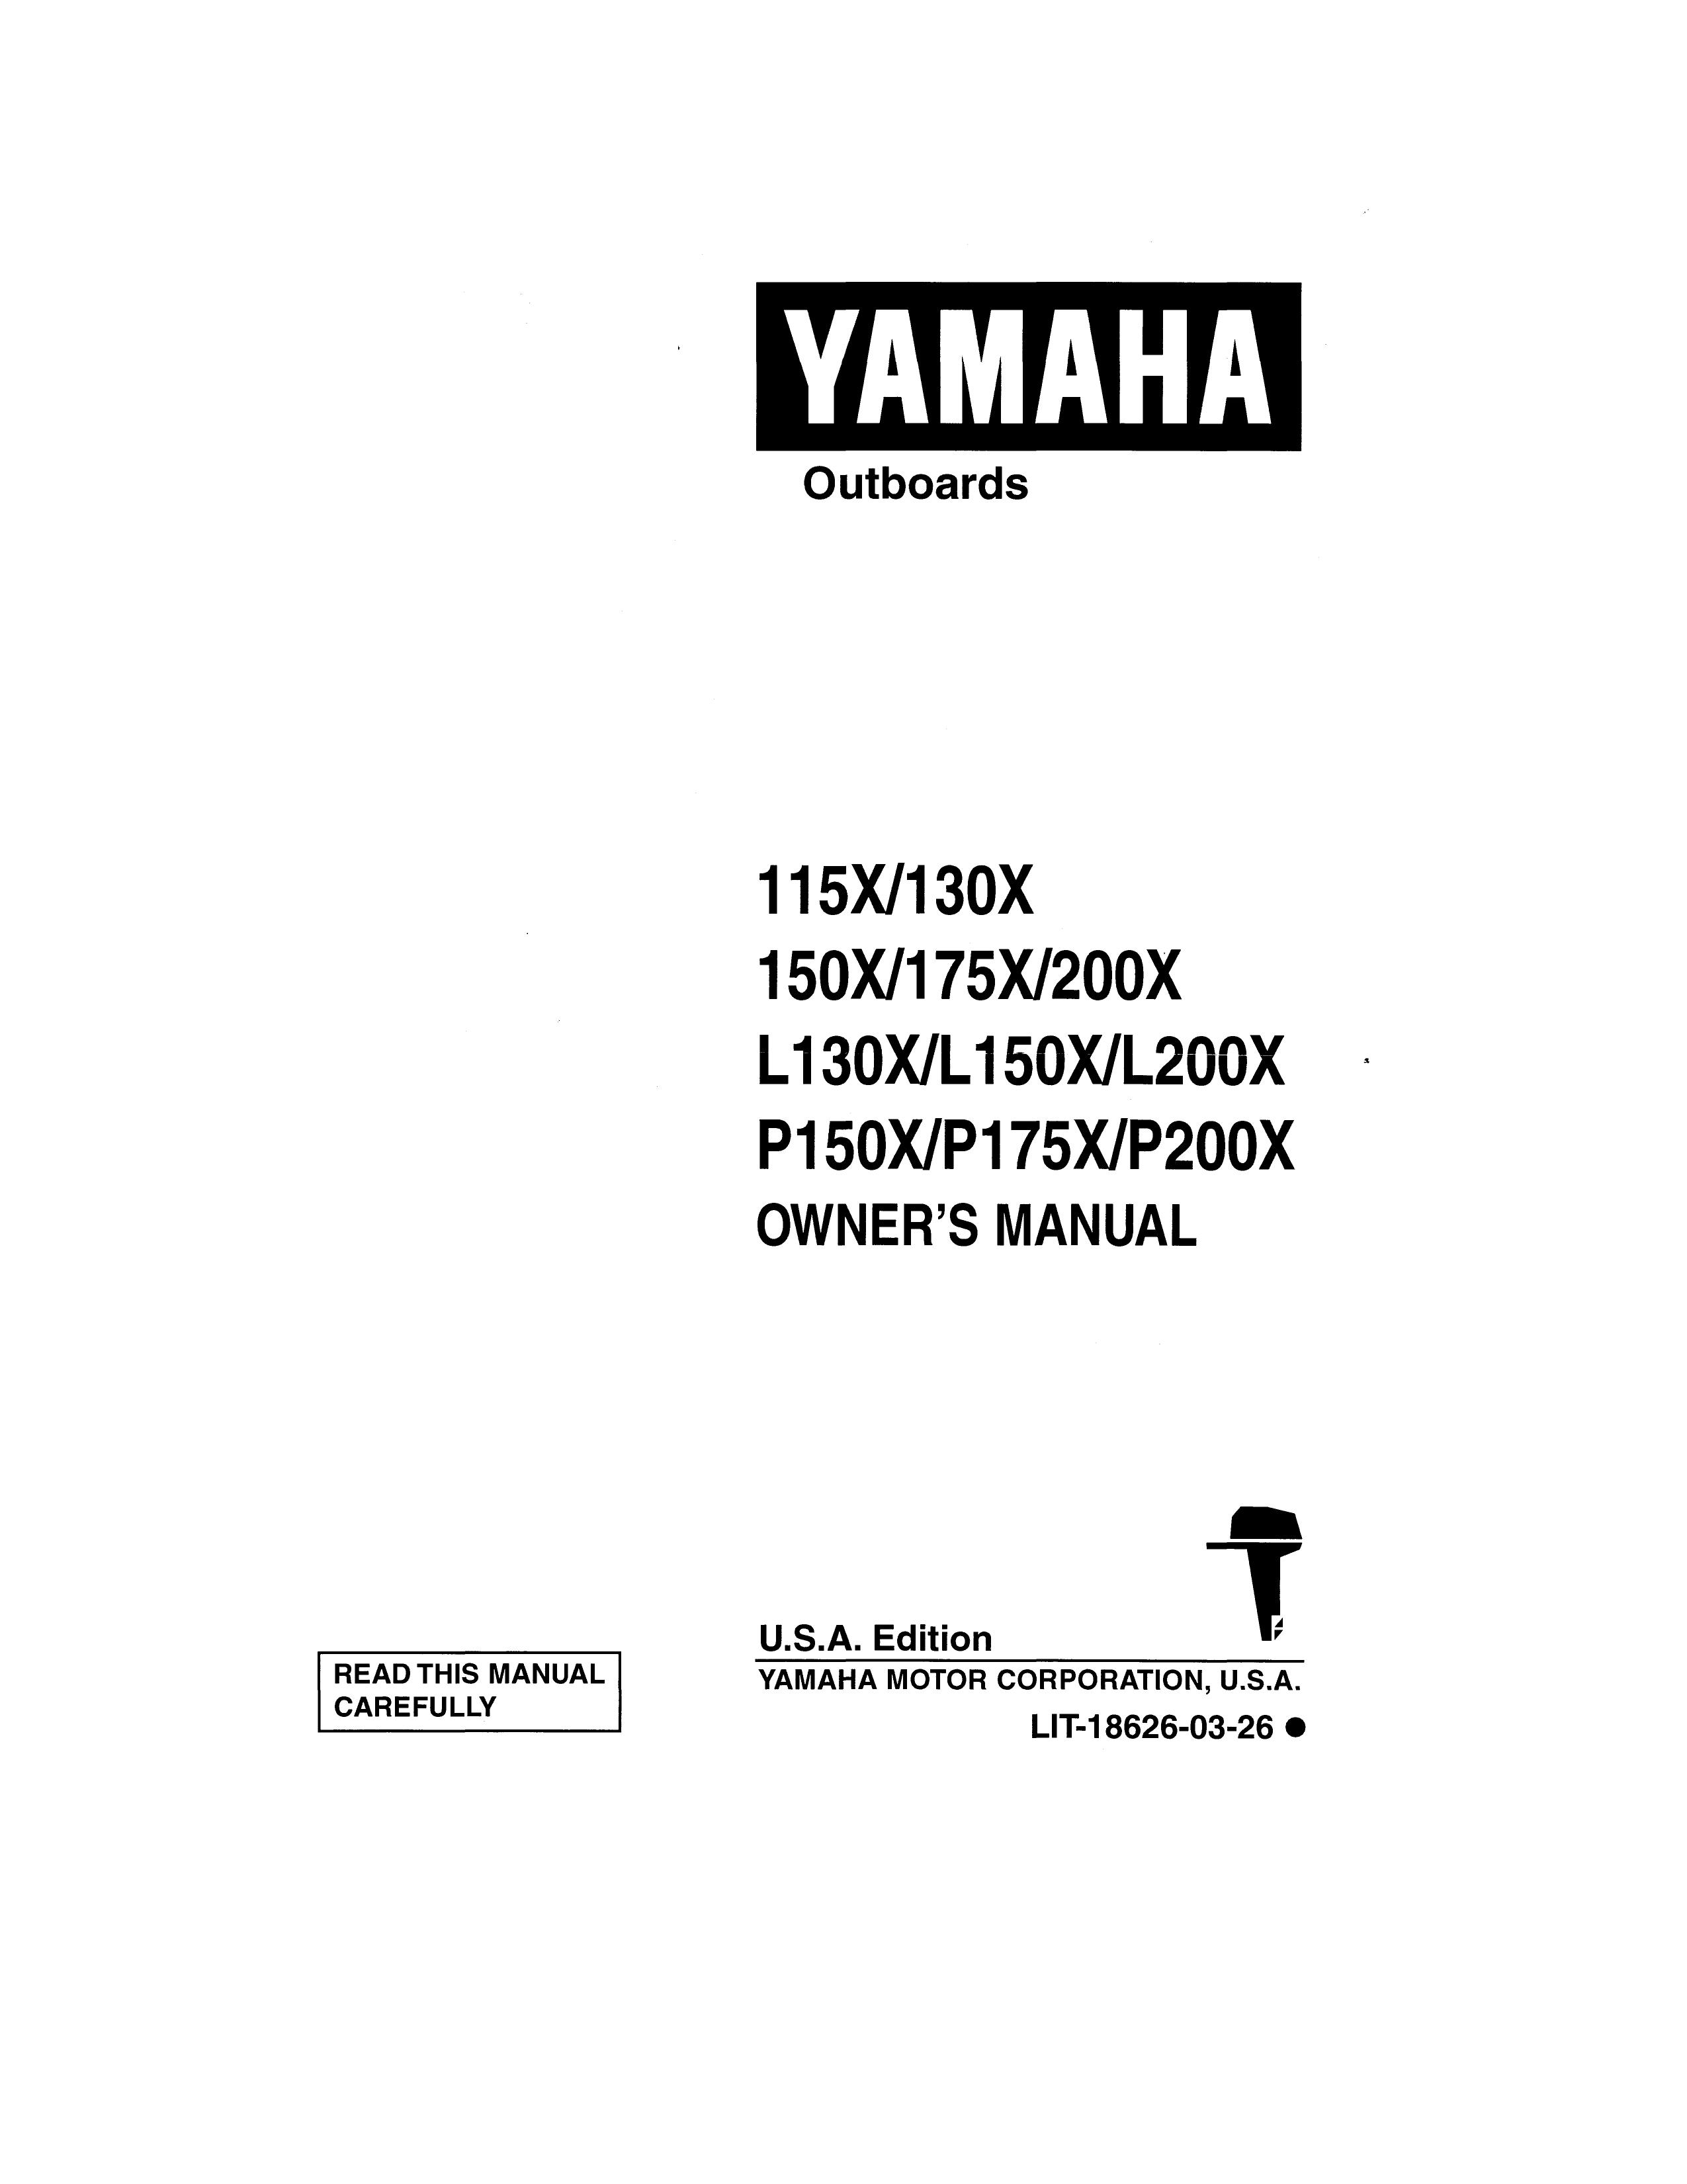 Yamaha L150X Outboard Motor User Manual